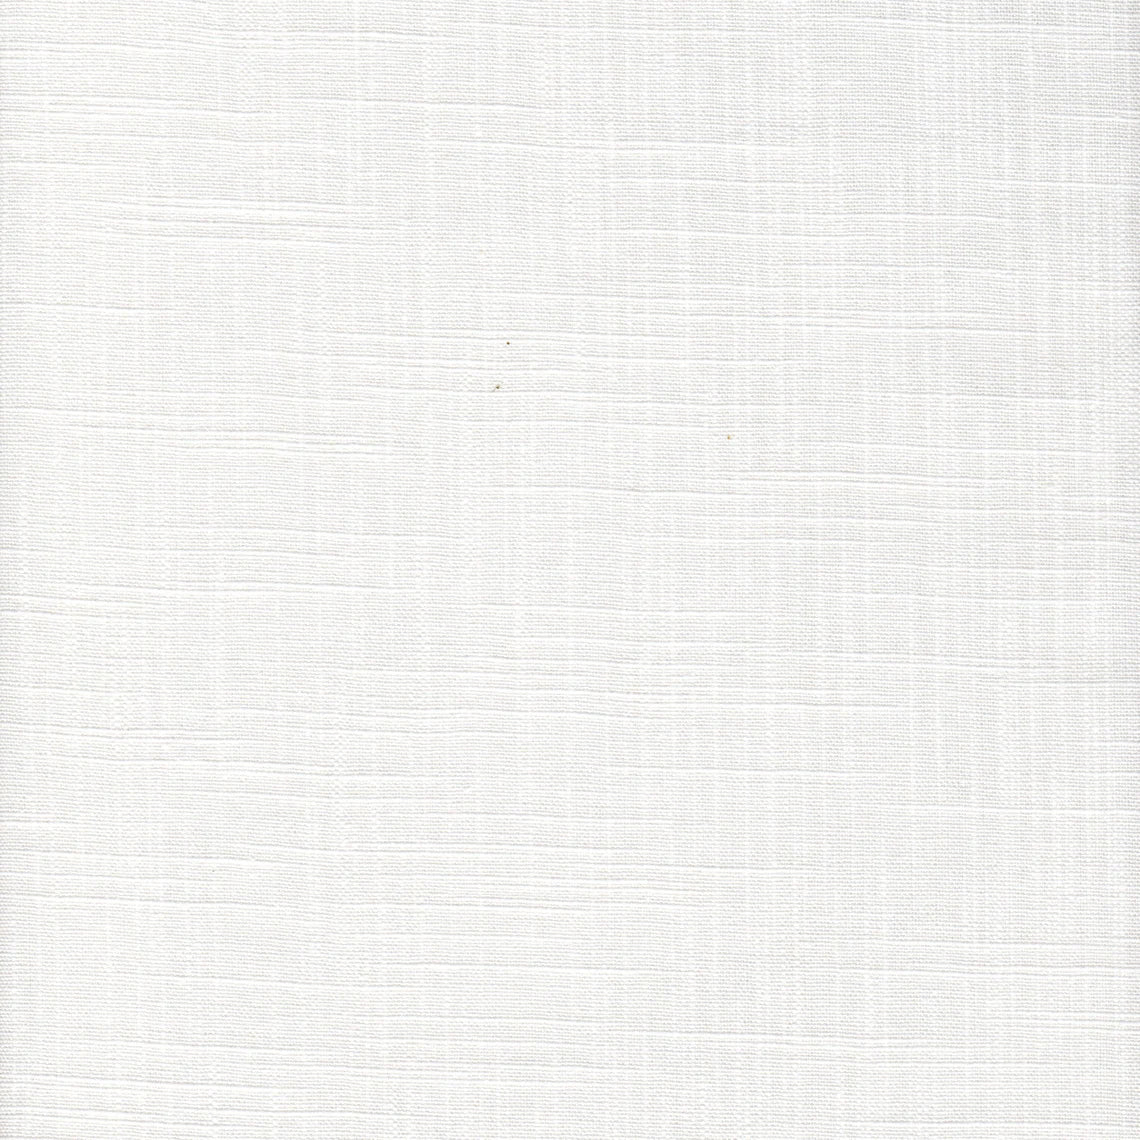 pinch pleated curtains in Modern Farmhouse Solid White Cotton Slub Canvas